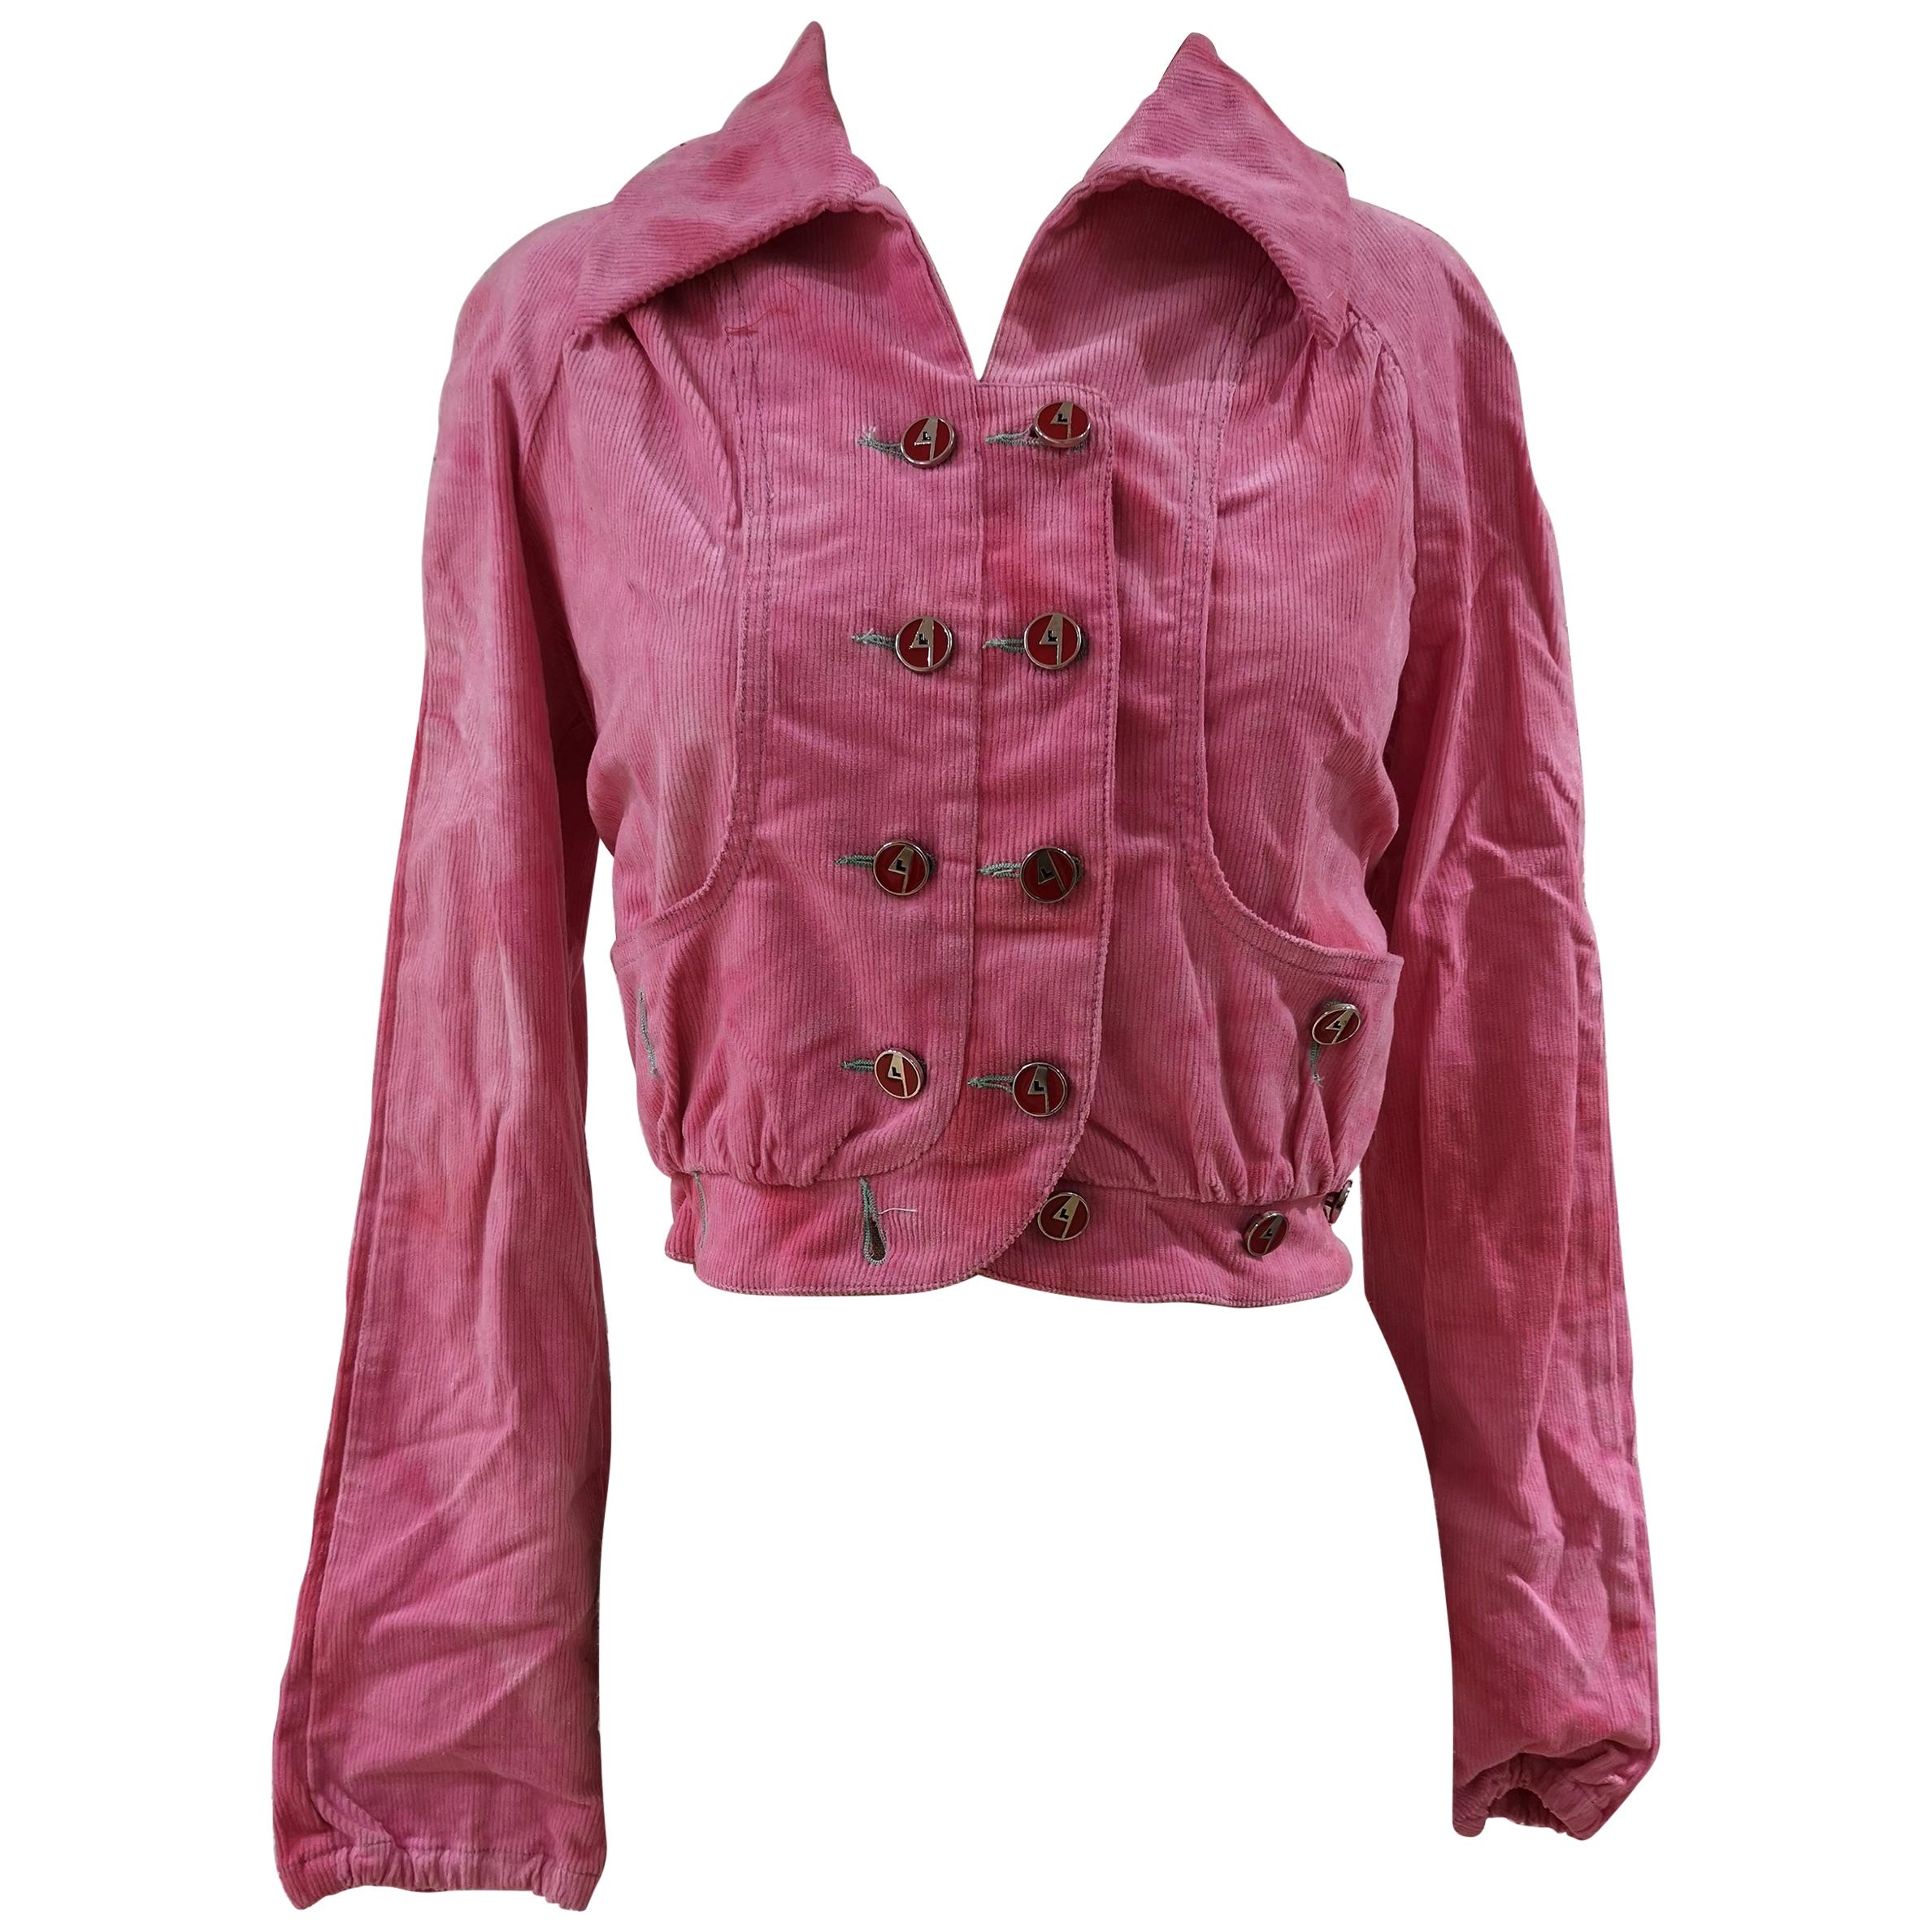 Christian Lacroix pink fluo jacket